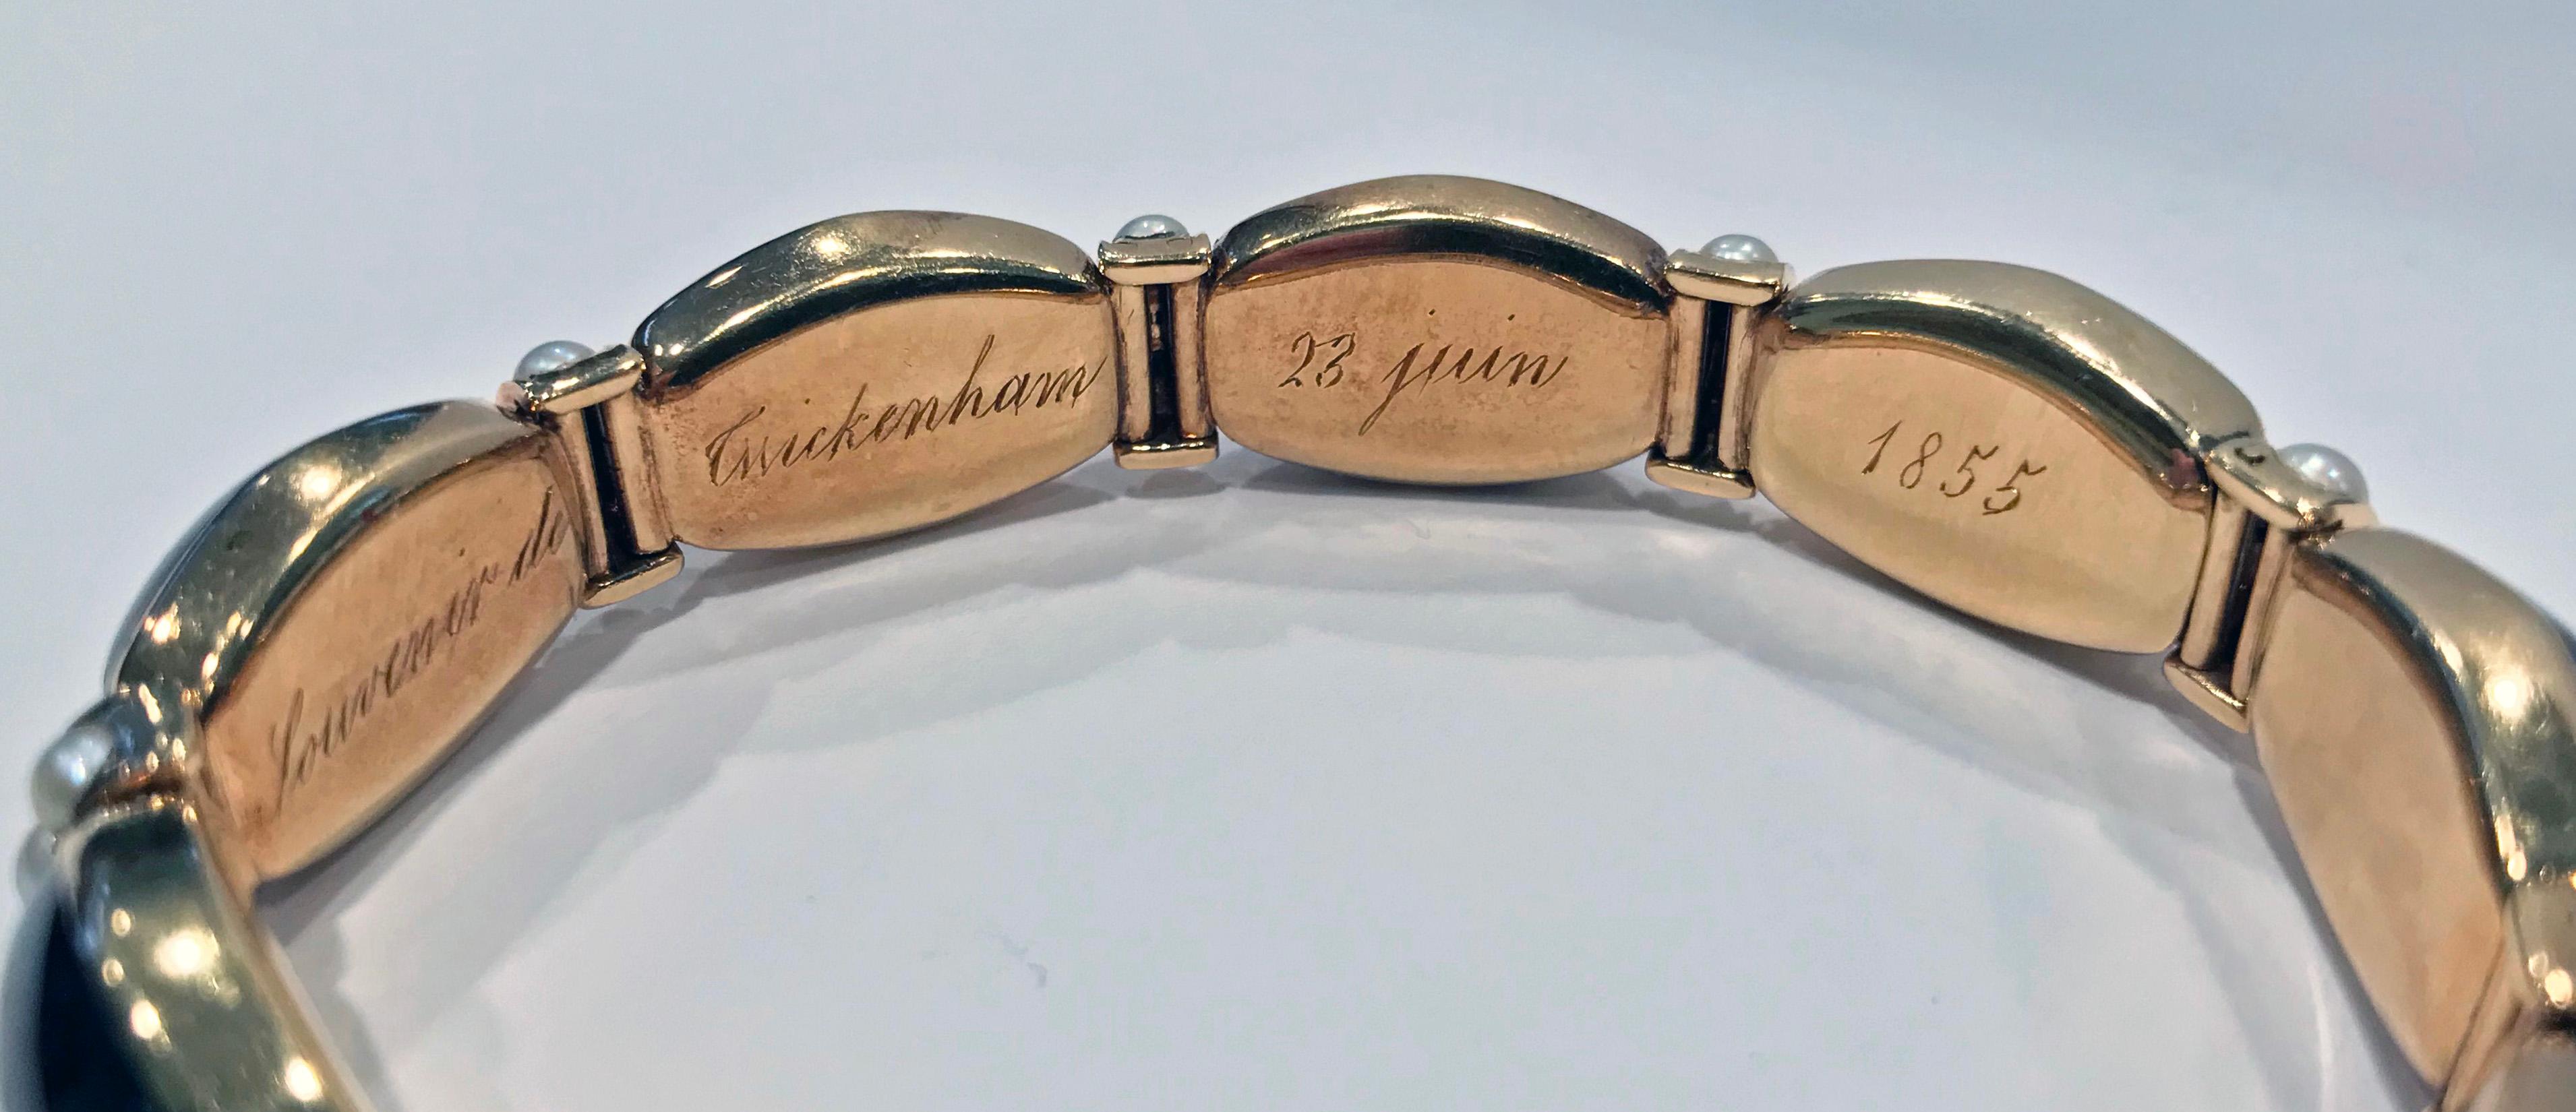 Cabochon John Brogden Gold Carbuncle and Pearl Bracelet, circa 1855